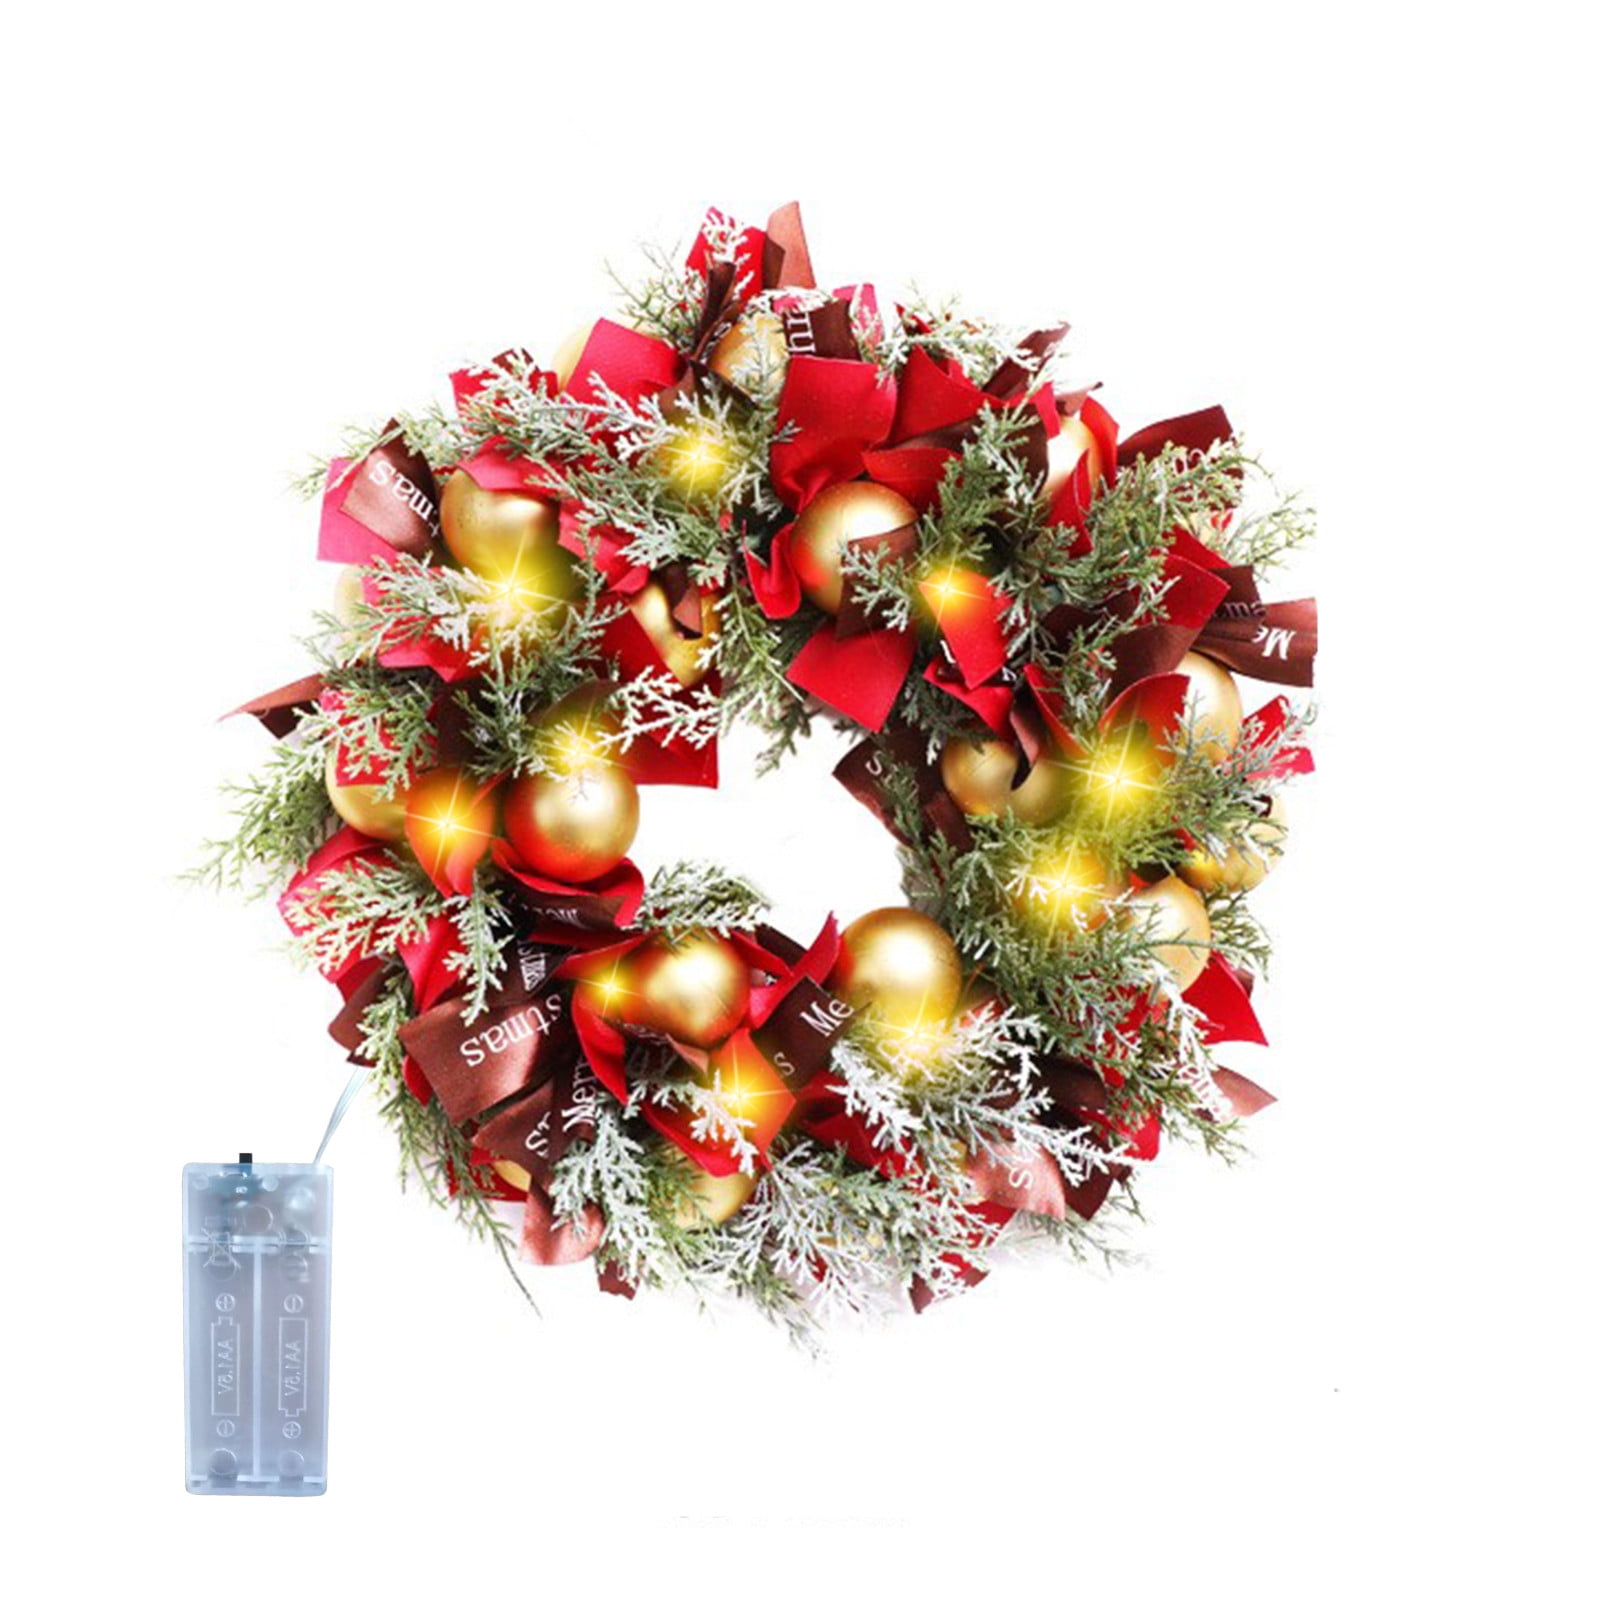 lulshou Home Decor Clearance,Christmas Wreath With Lights 13.7 ...